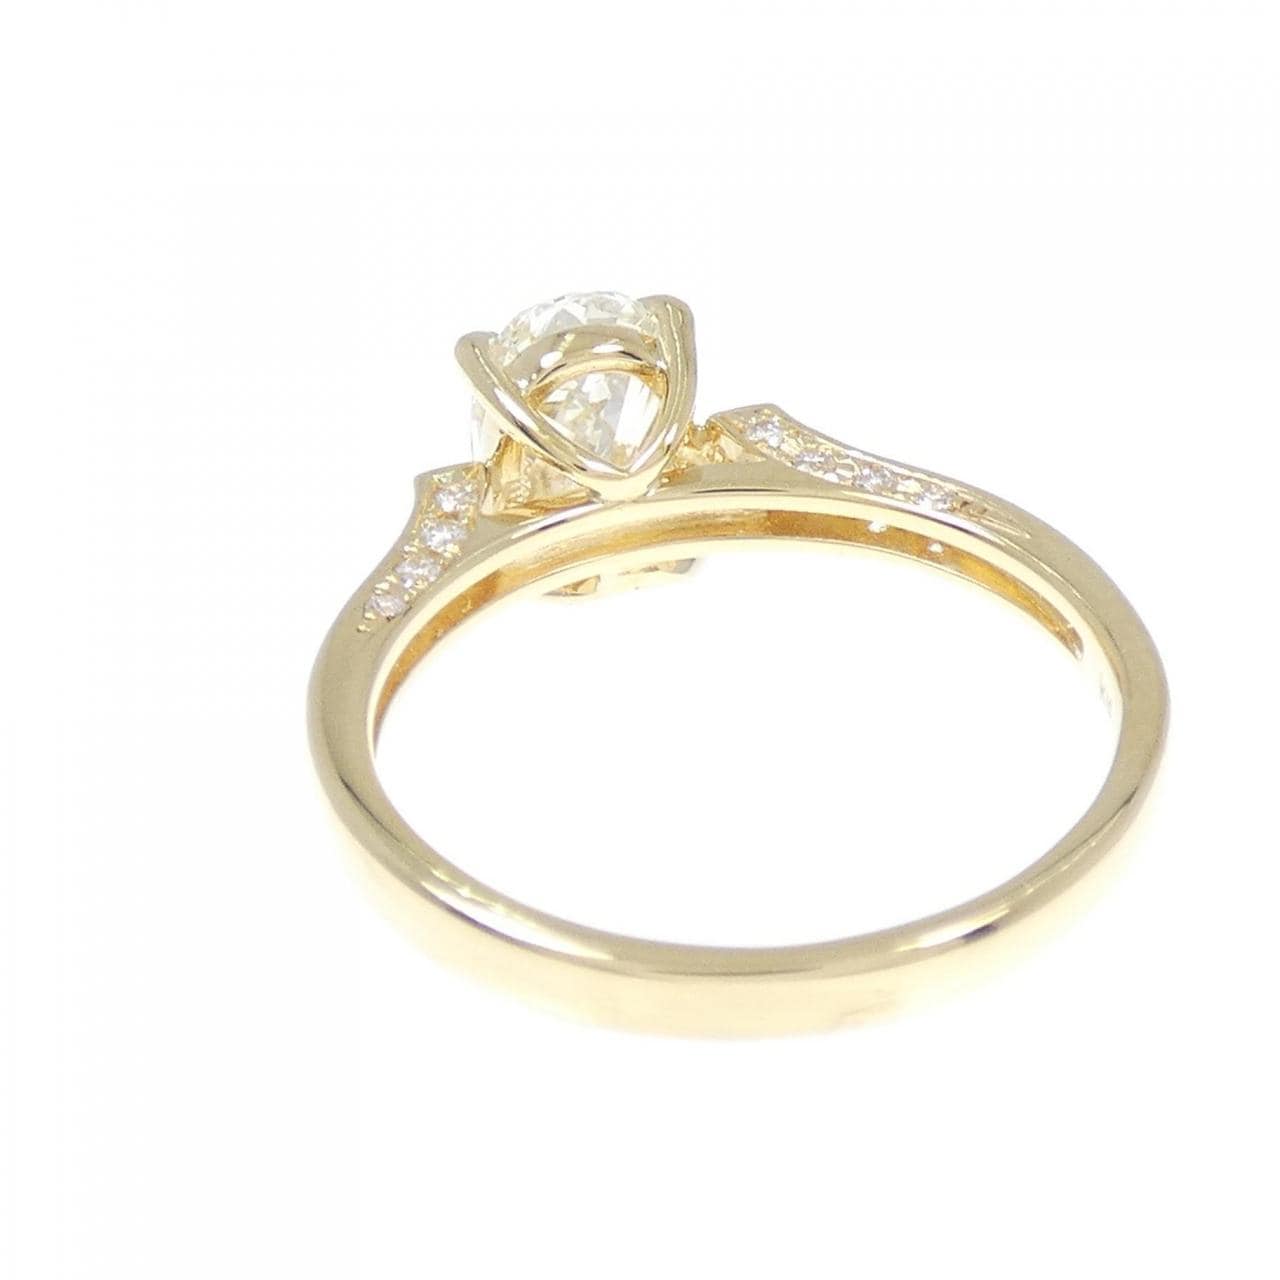 [Remake] K18YG Diamond ring 1.504CT M VS1 oval cut